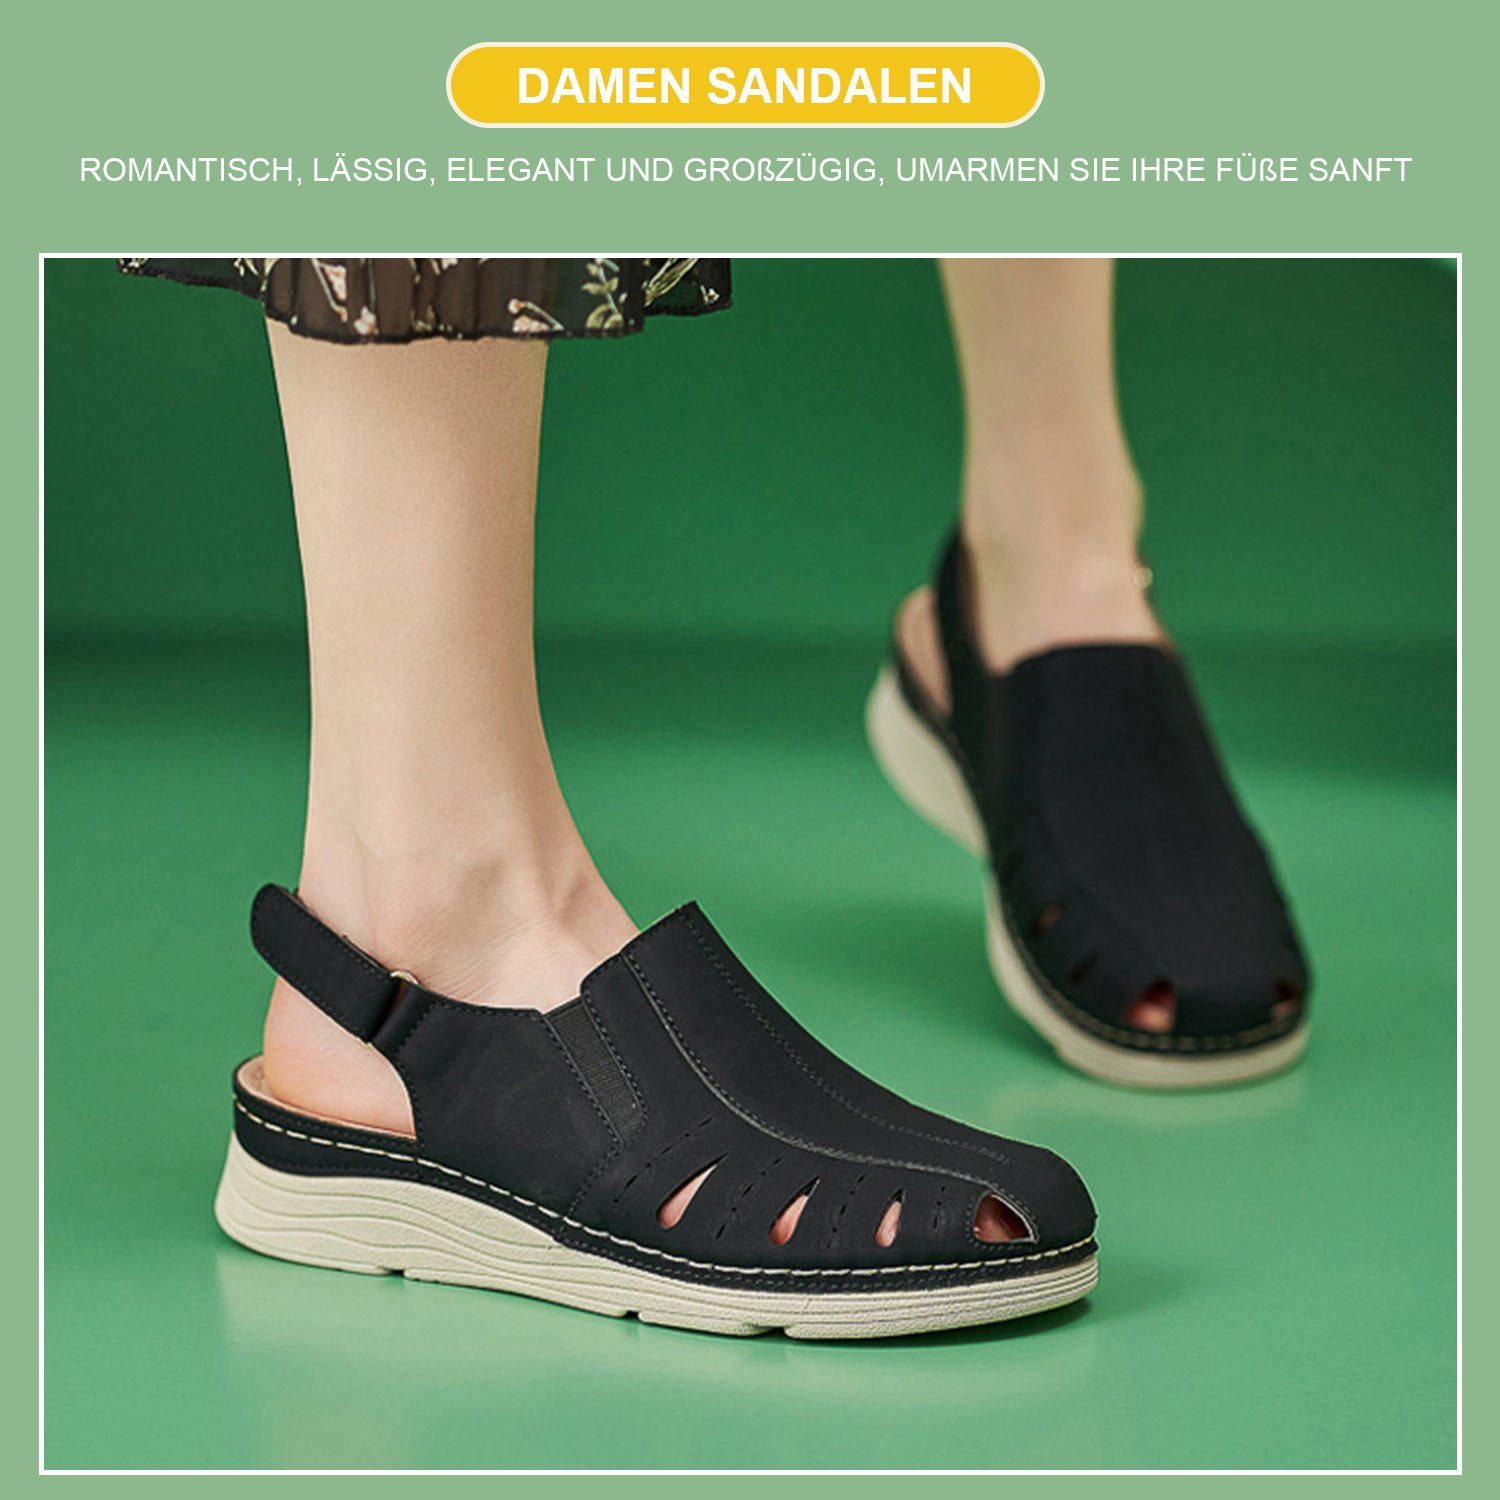 Daisred Casual Frauen Geschlossene Schuhe Schwarz Damen Sandalette Sandalen